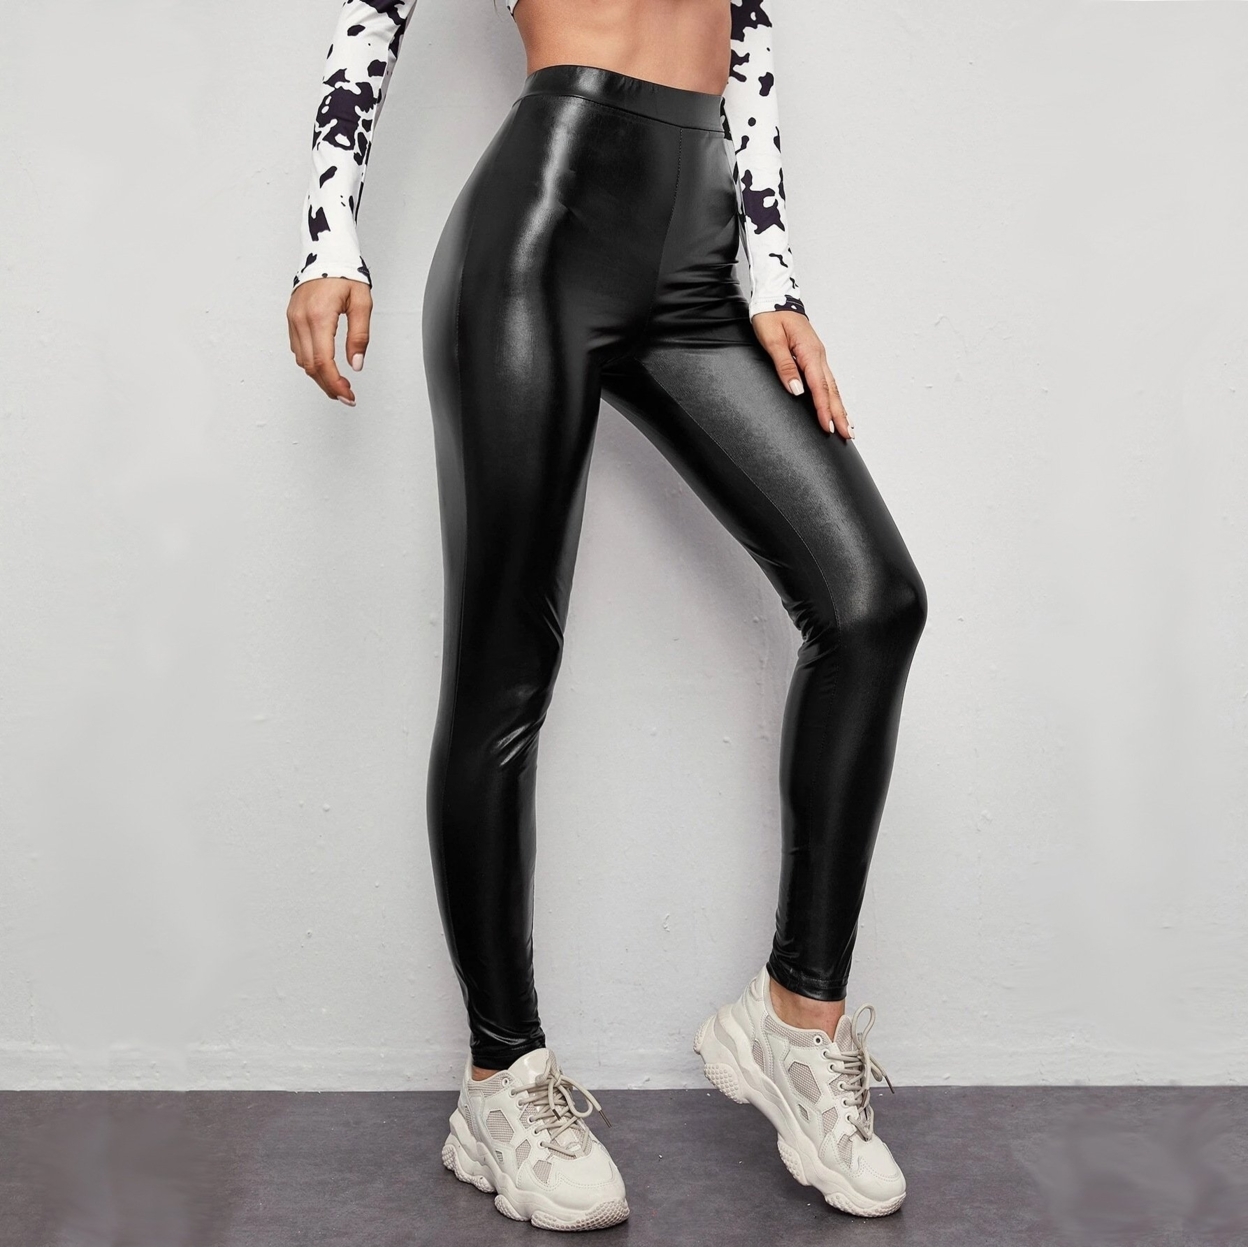 Leather Pants Women's High Waist Large Size Stretch Slim Slimming Feet Leggings - L